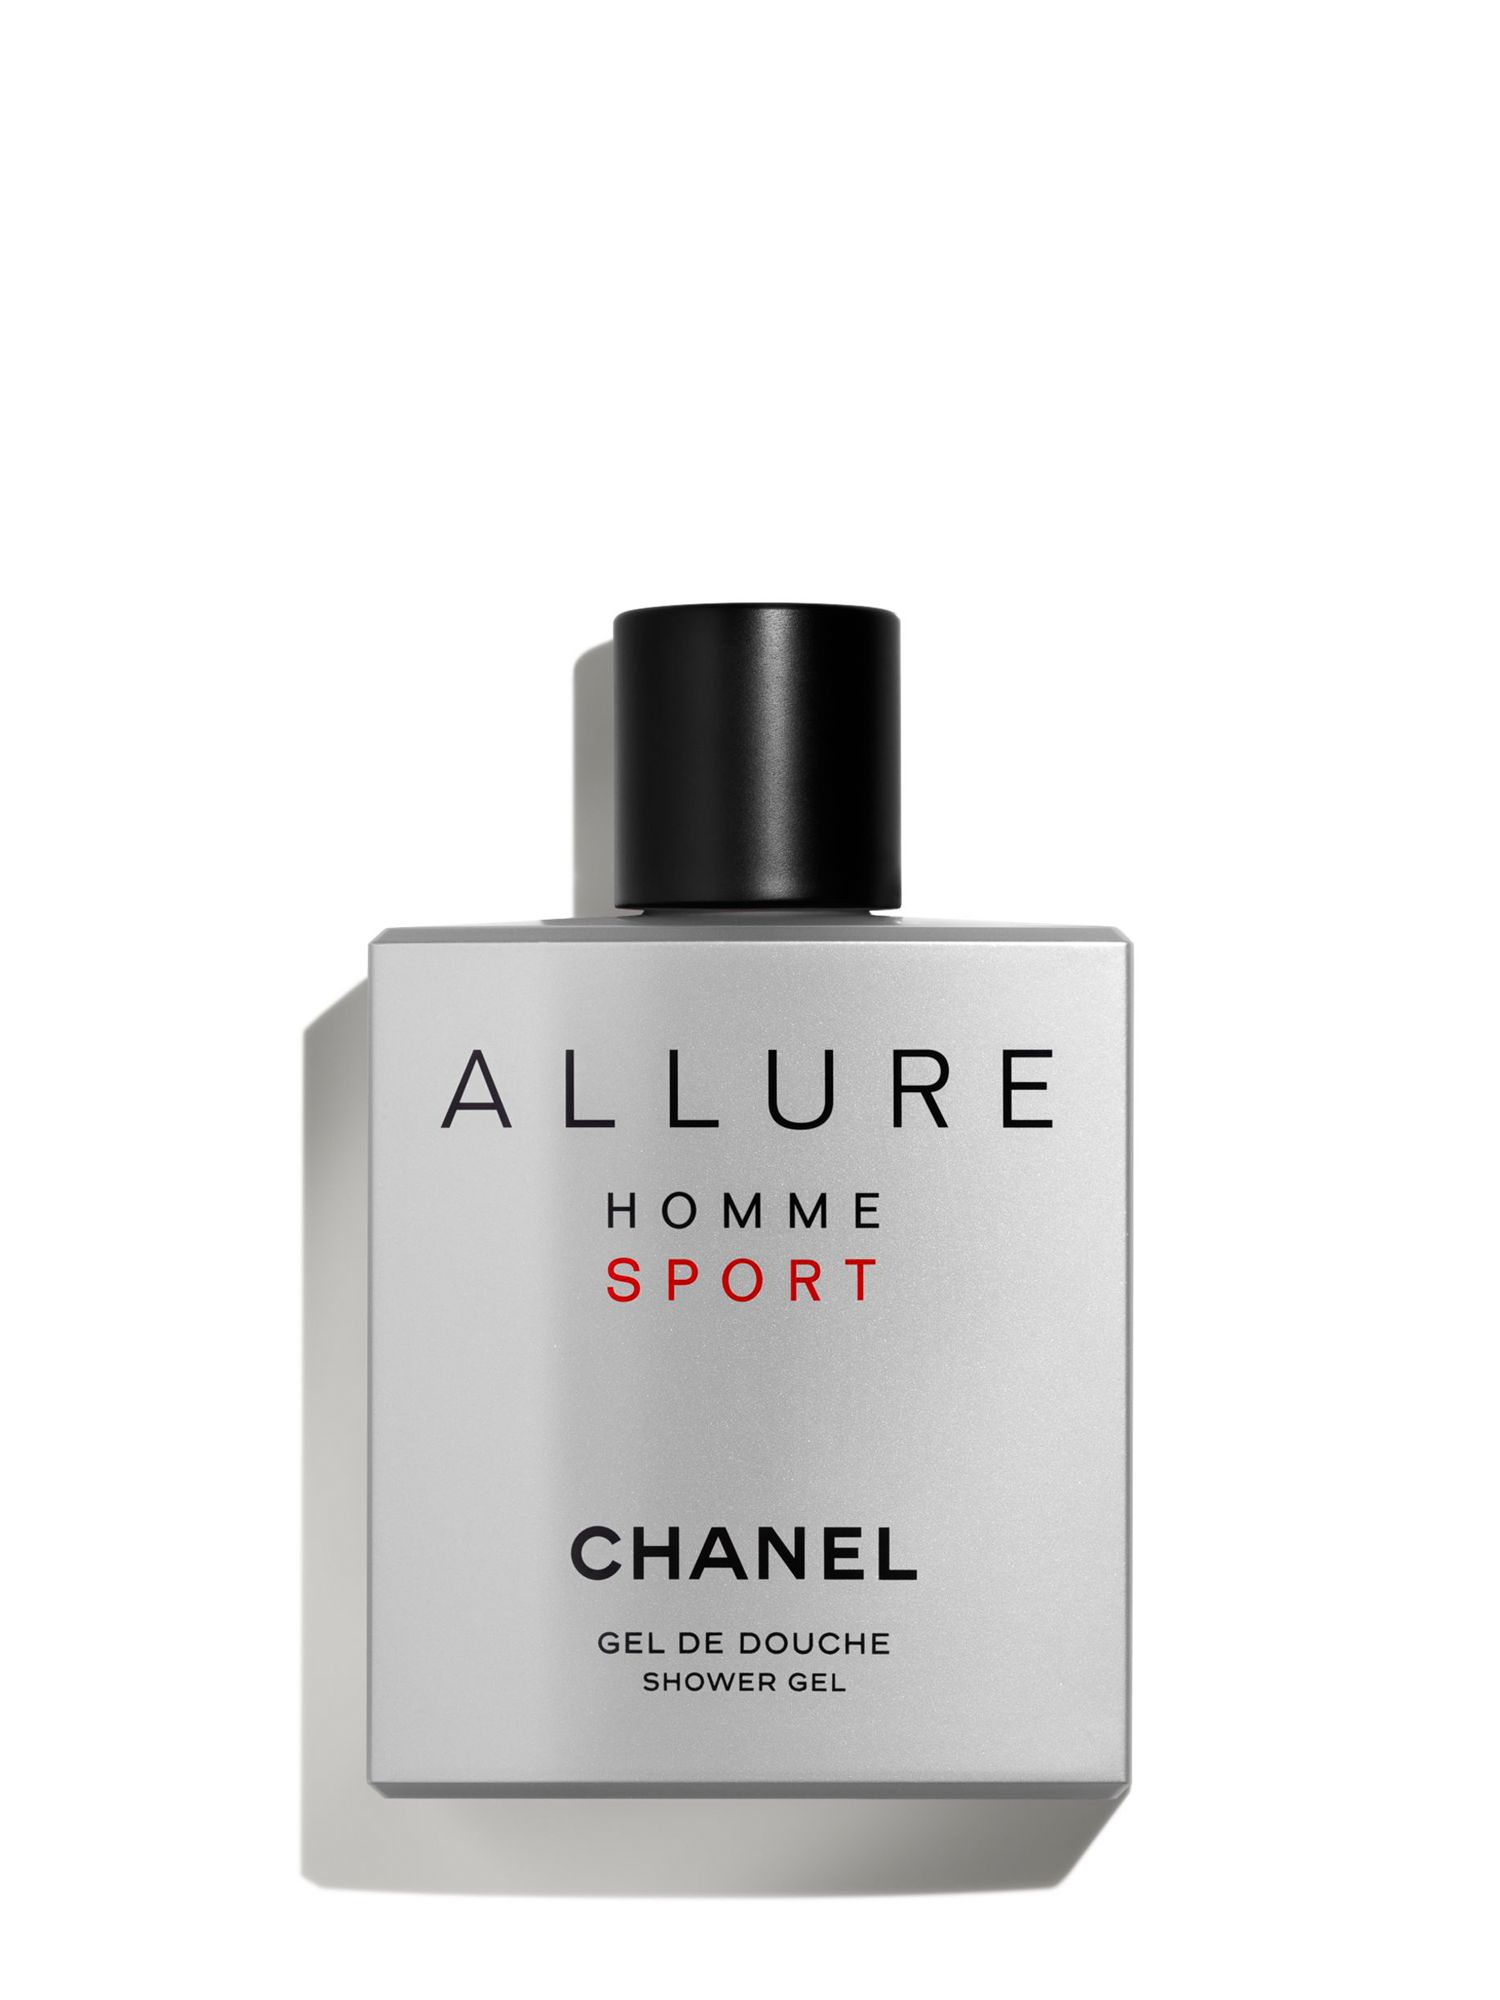 CHANEL Allure Homme Sport Shower Gel, 200ml at John Lewis & Partners